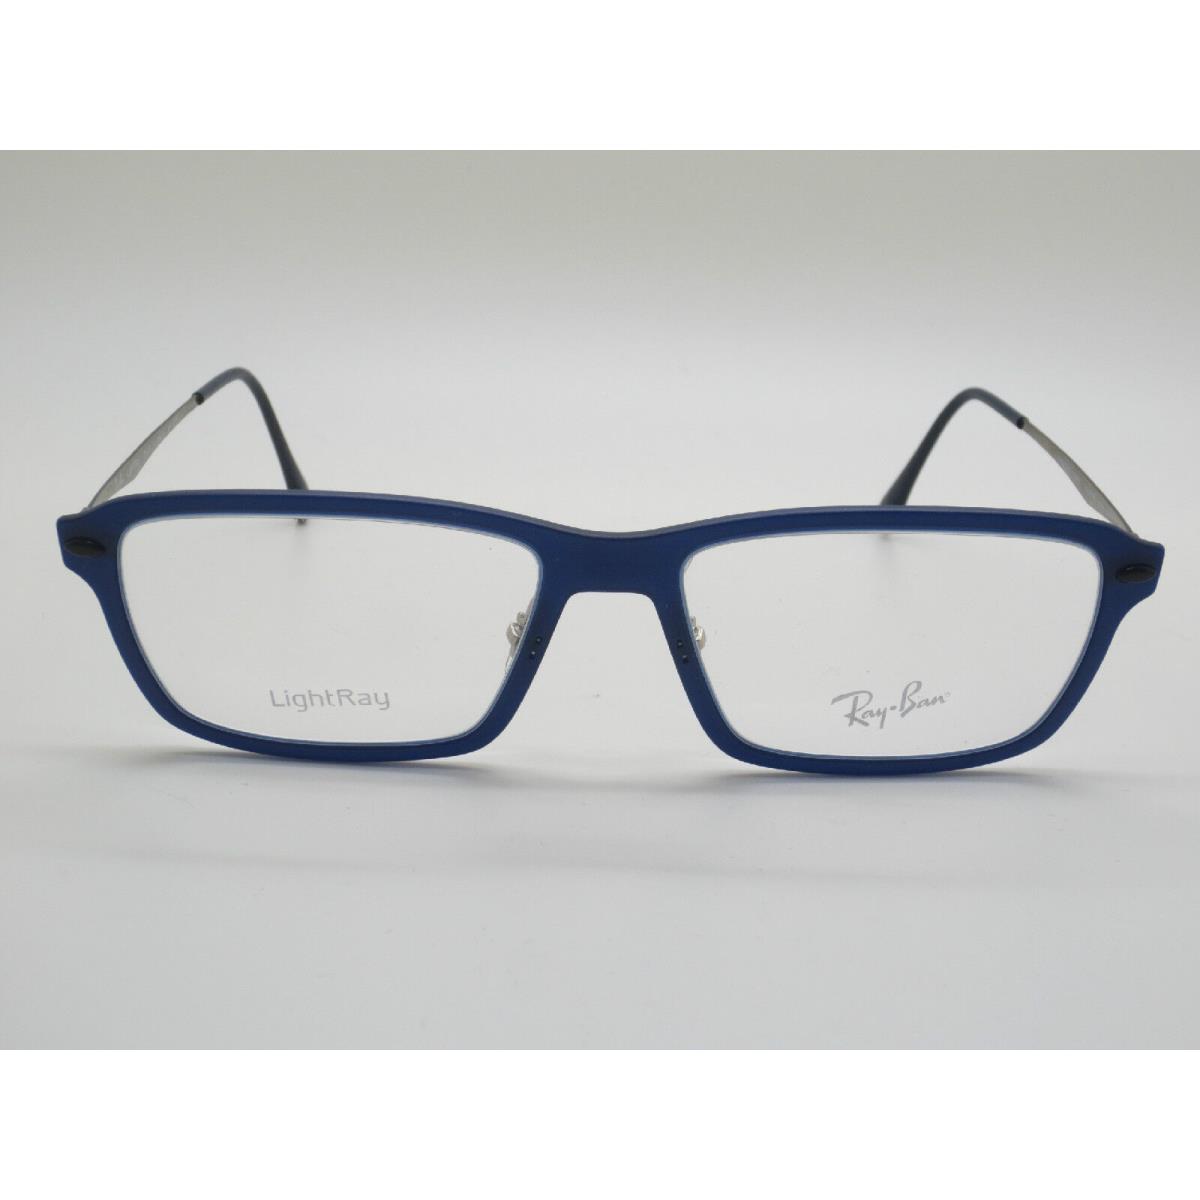 Ray-ban Ray Ban RB 7038 5451 Lightray Matte Navy Blue 53mm Eyeglasses